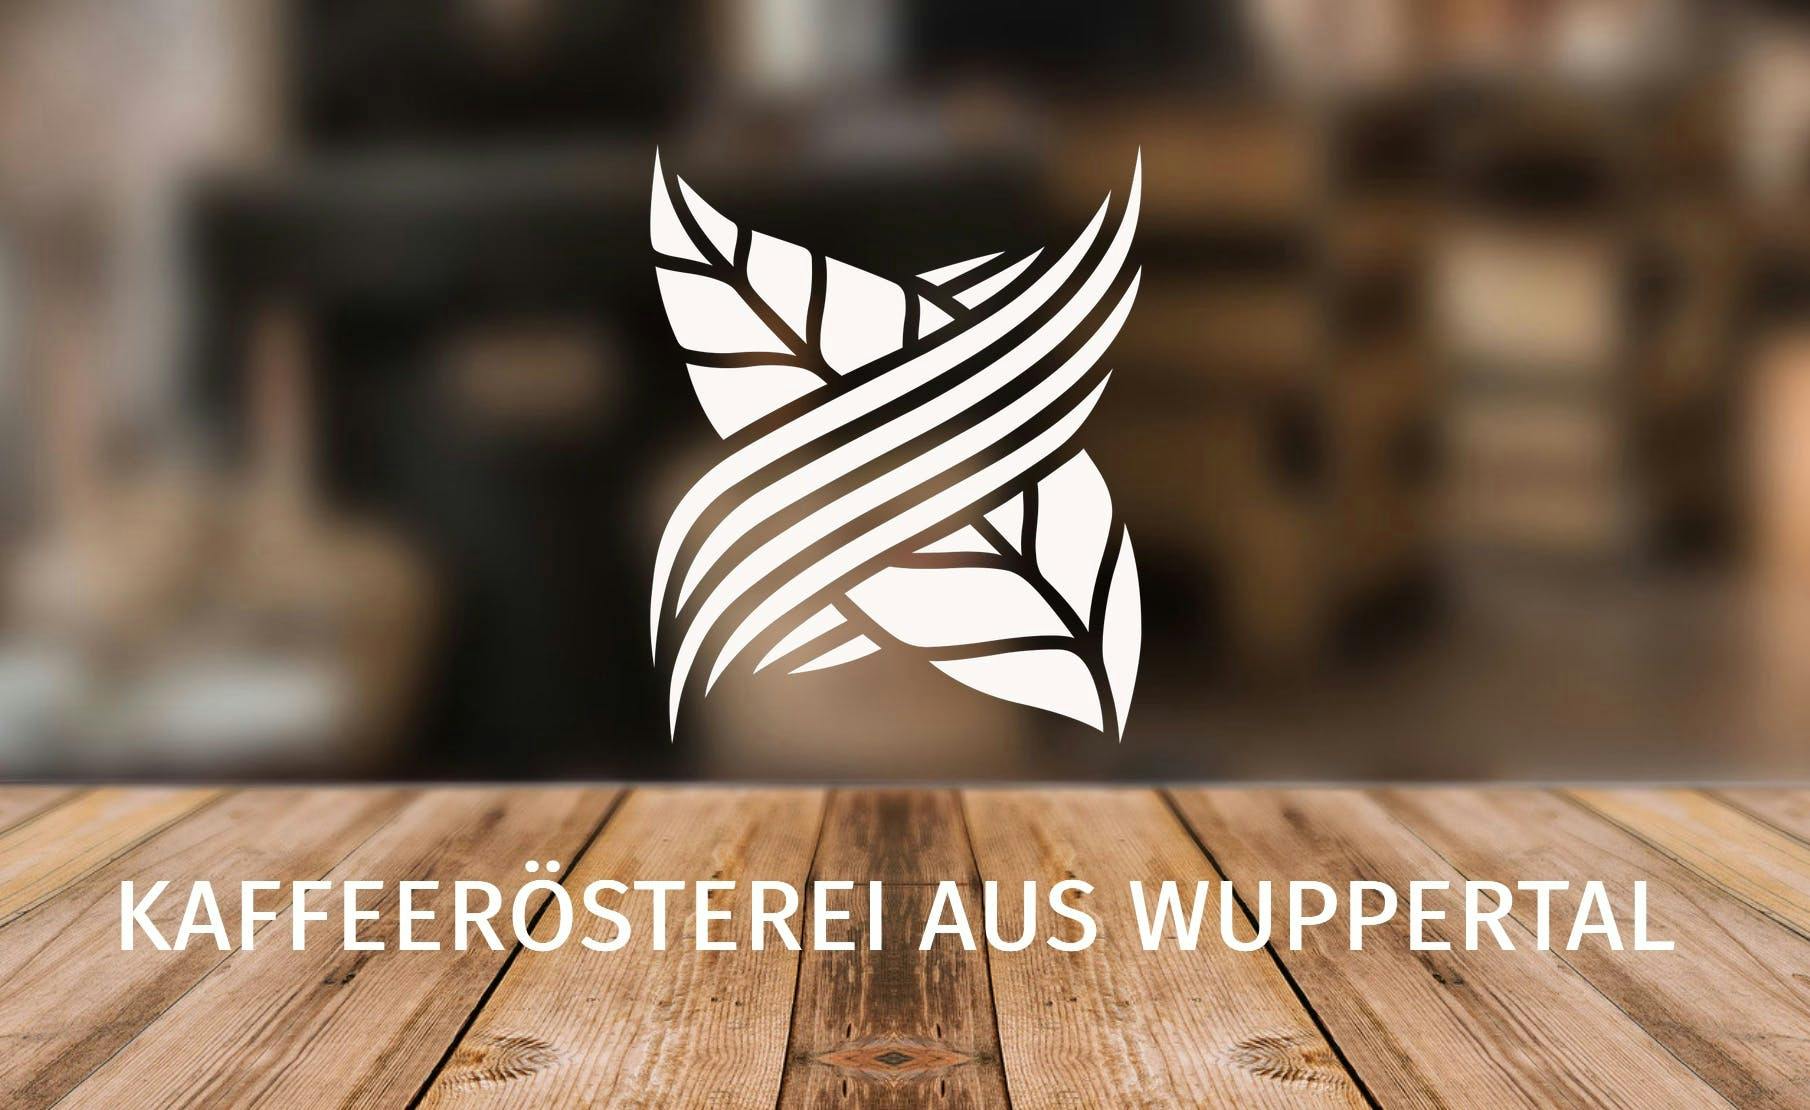 En-tête du site web Kivamo affichant la phrase : "Kaffeerösterei aus Wuppertal"